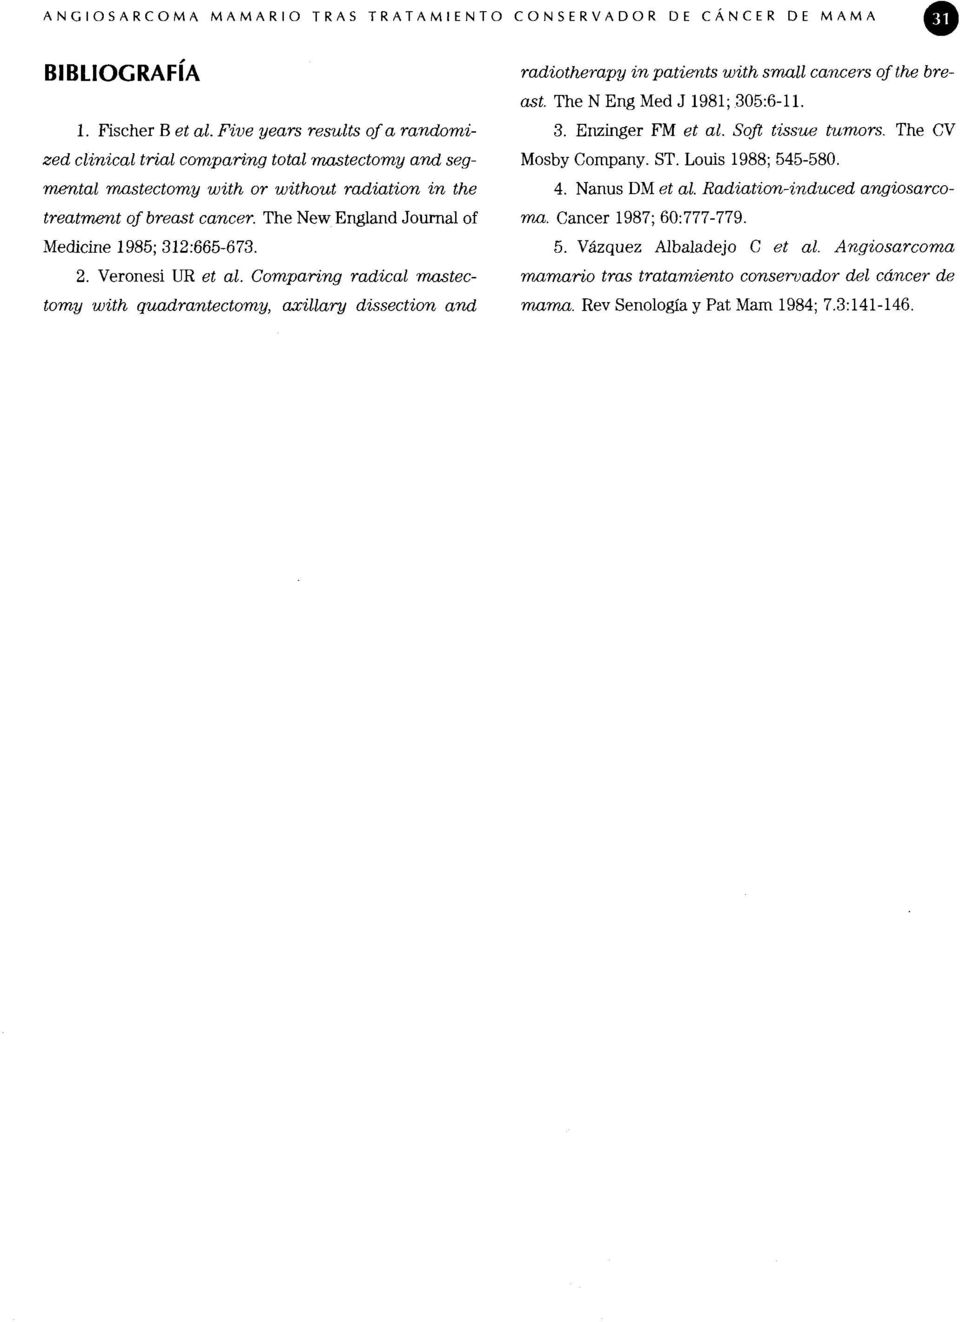 The New England Journal of Medicine 1985; 312:665-673. 2. Veronesi UR et al.